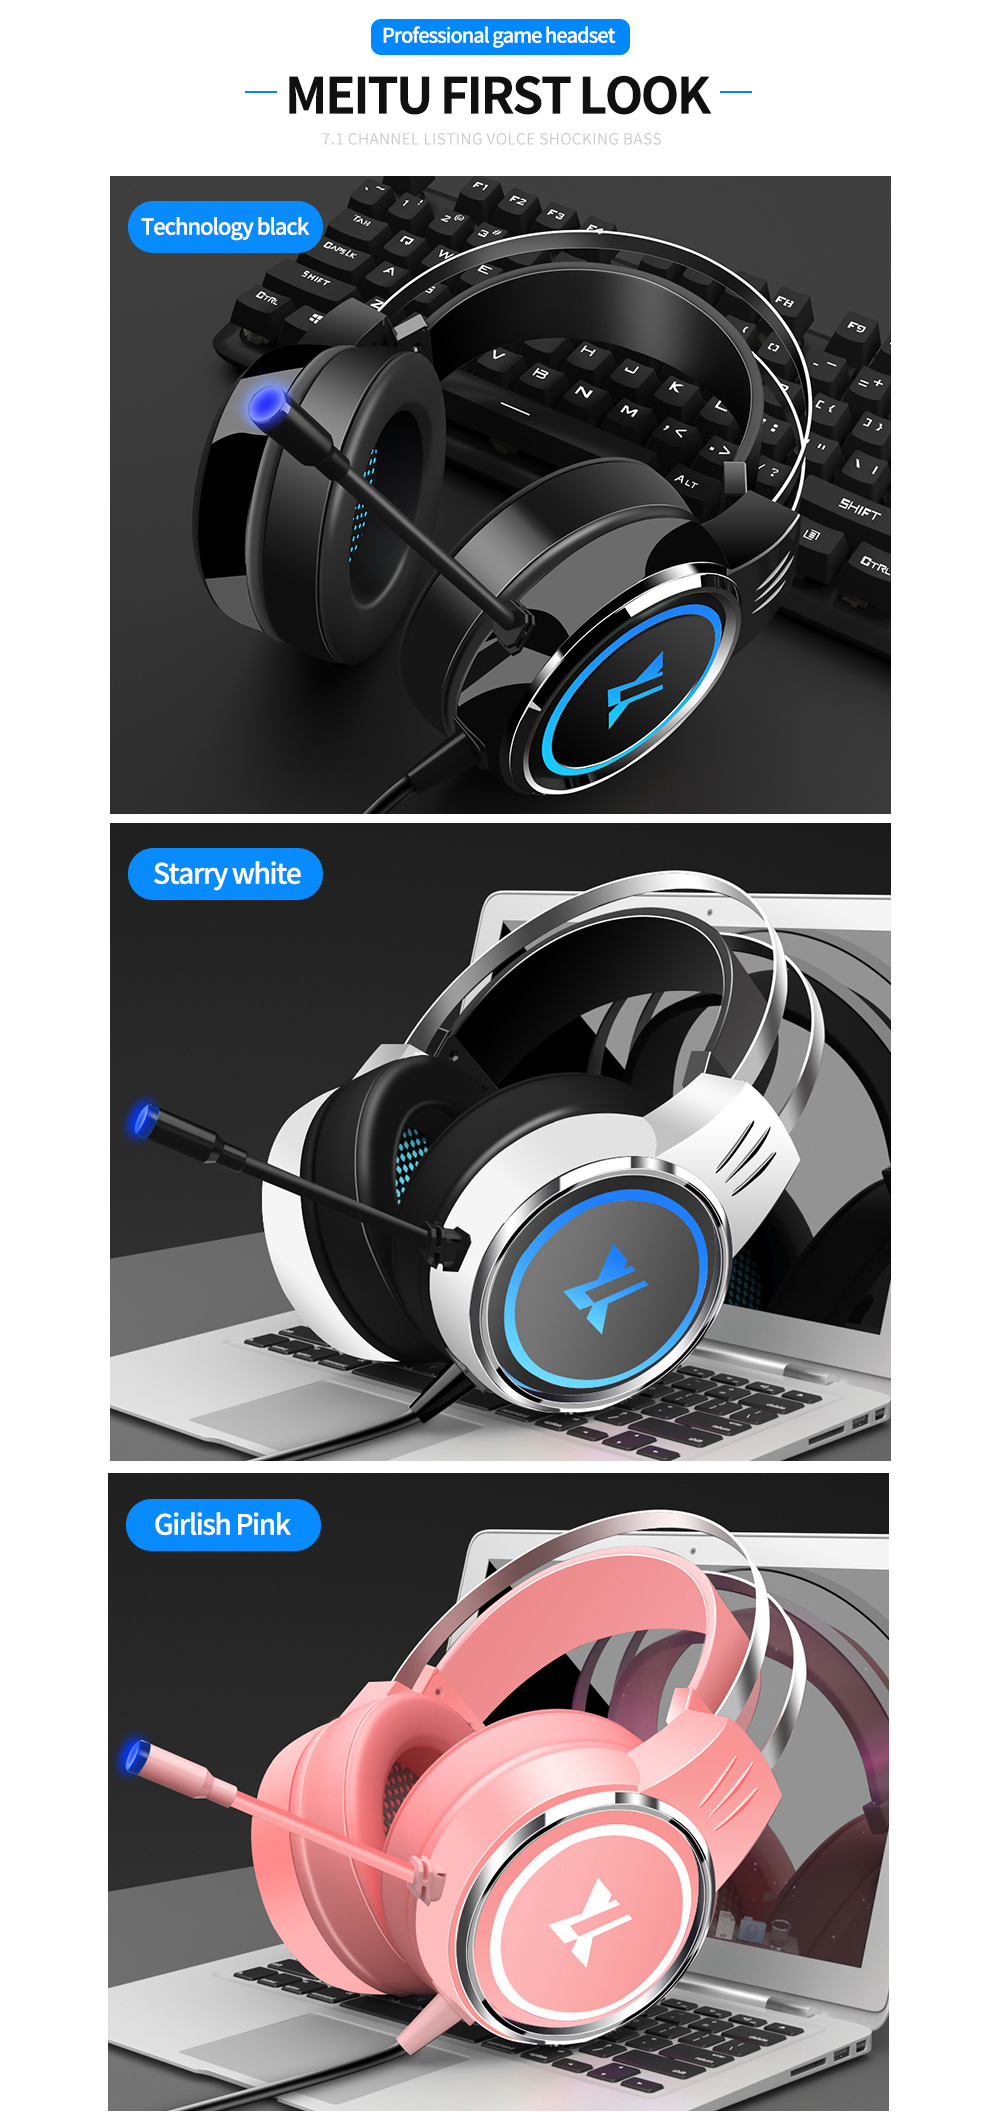 Heir-Audio-X8-Gaming-Headset-71Channerl-50mm-Unit-RGB-Colorful-Light-4D-Surround-Sound-Ergonomic-Des-1774816-3